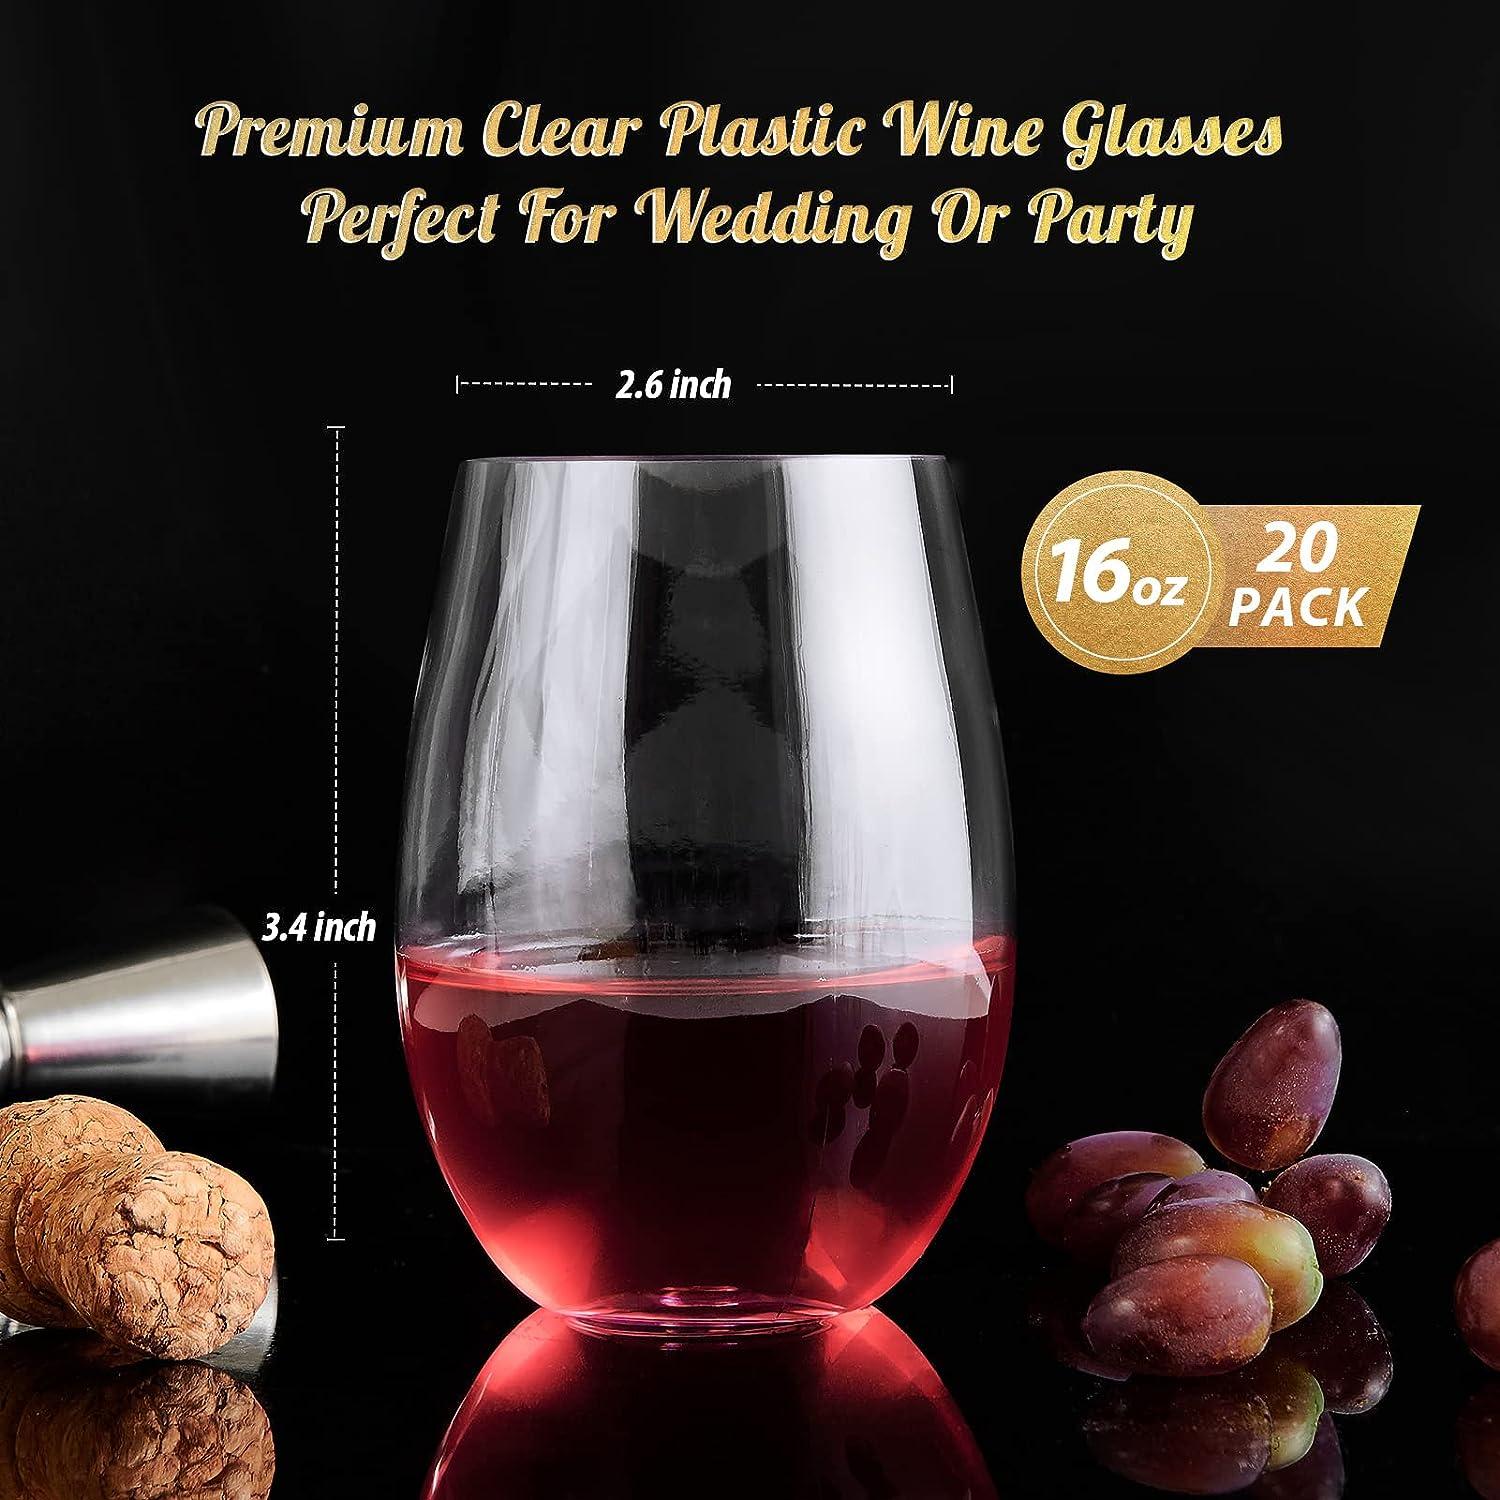 Clear Premium BPA-Free Plastic Wine Glasses - 25 Ct.